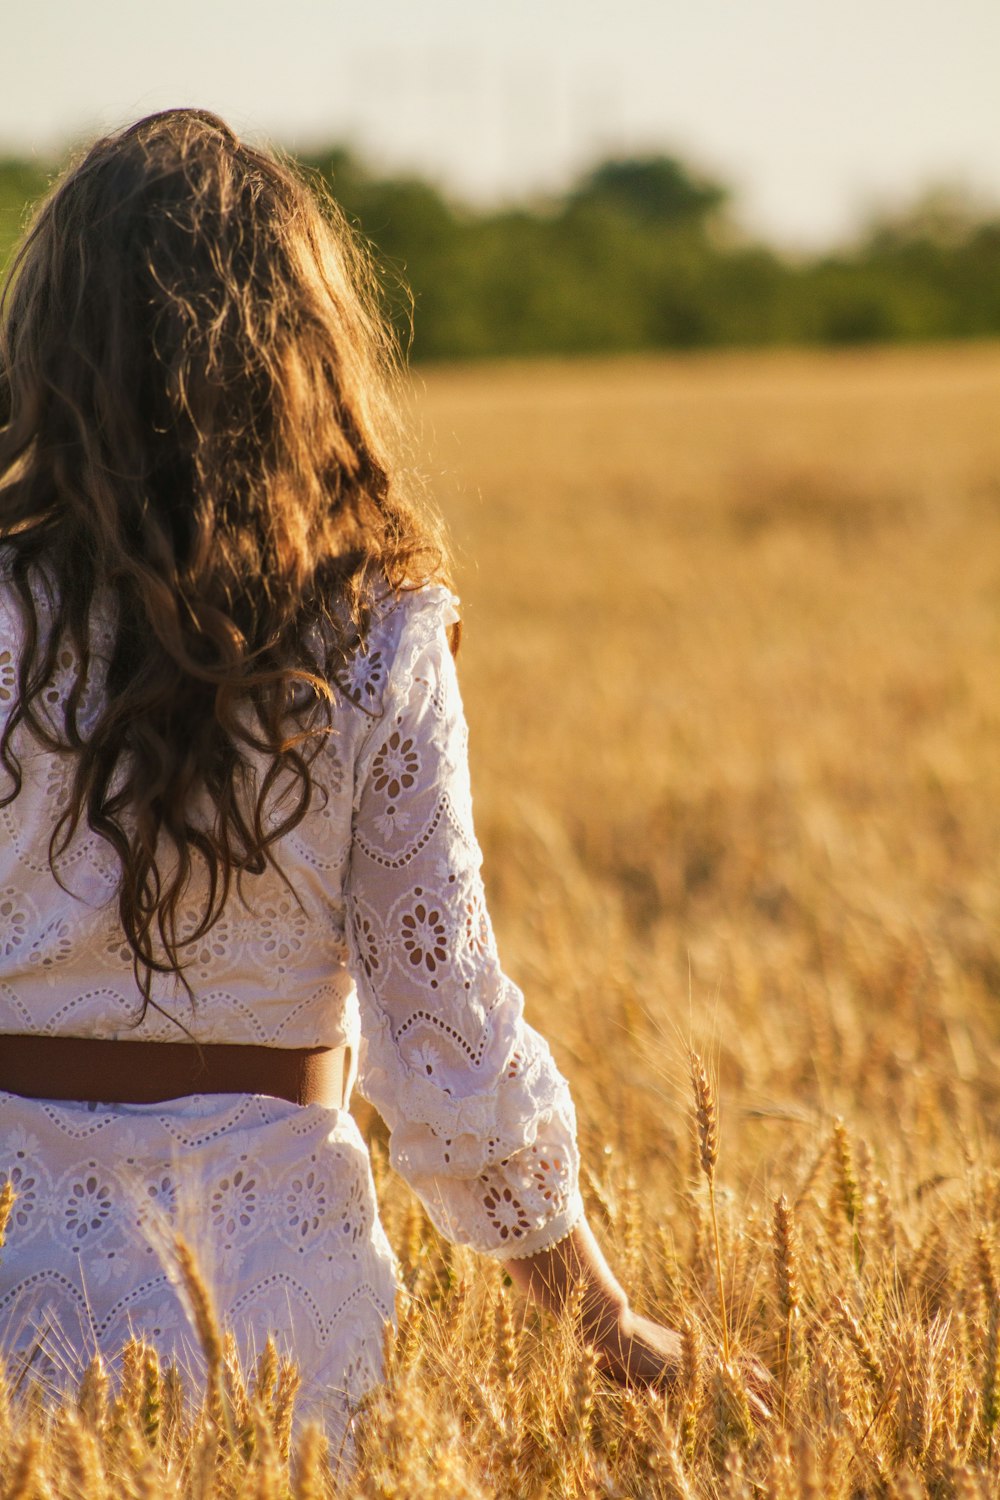 a girl in a white dress walking through a wheat field